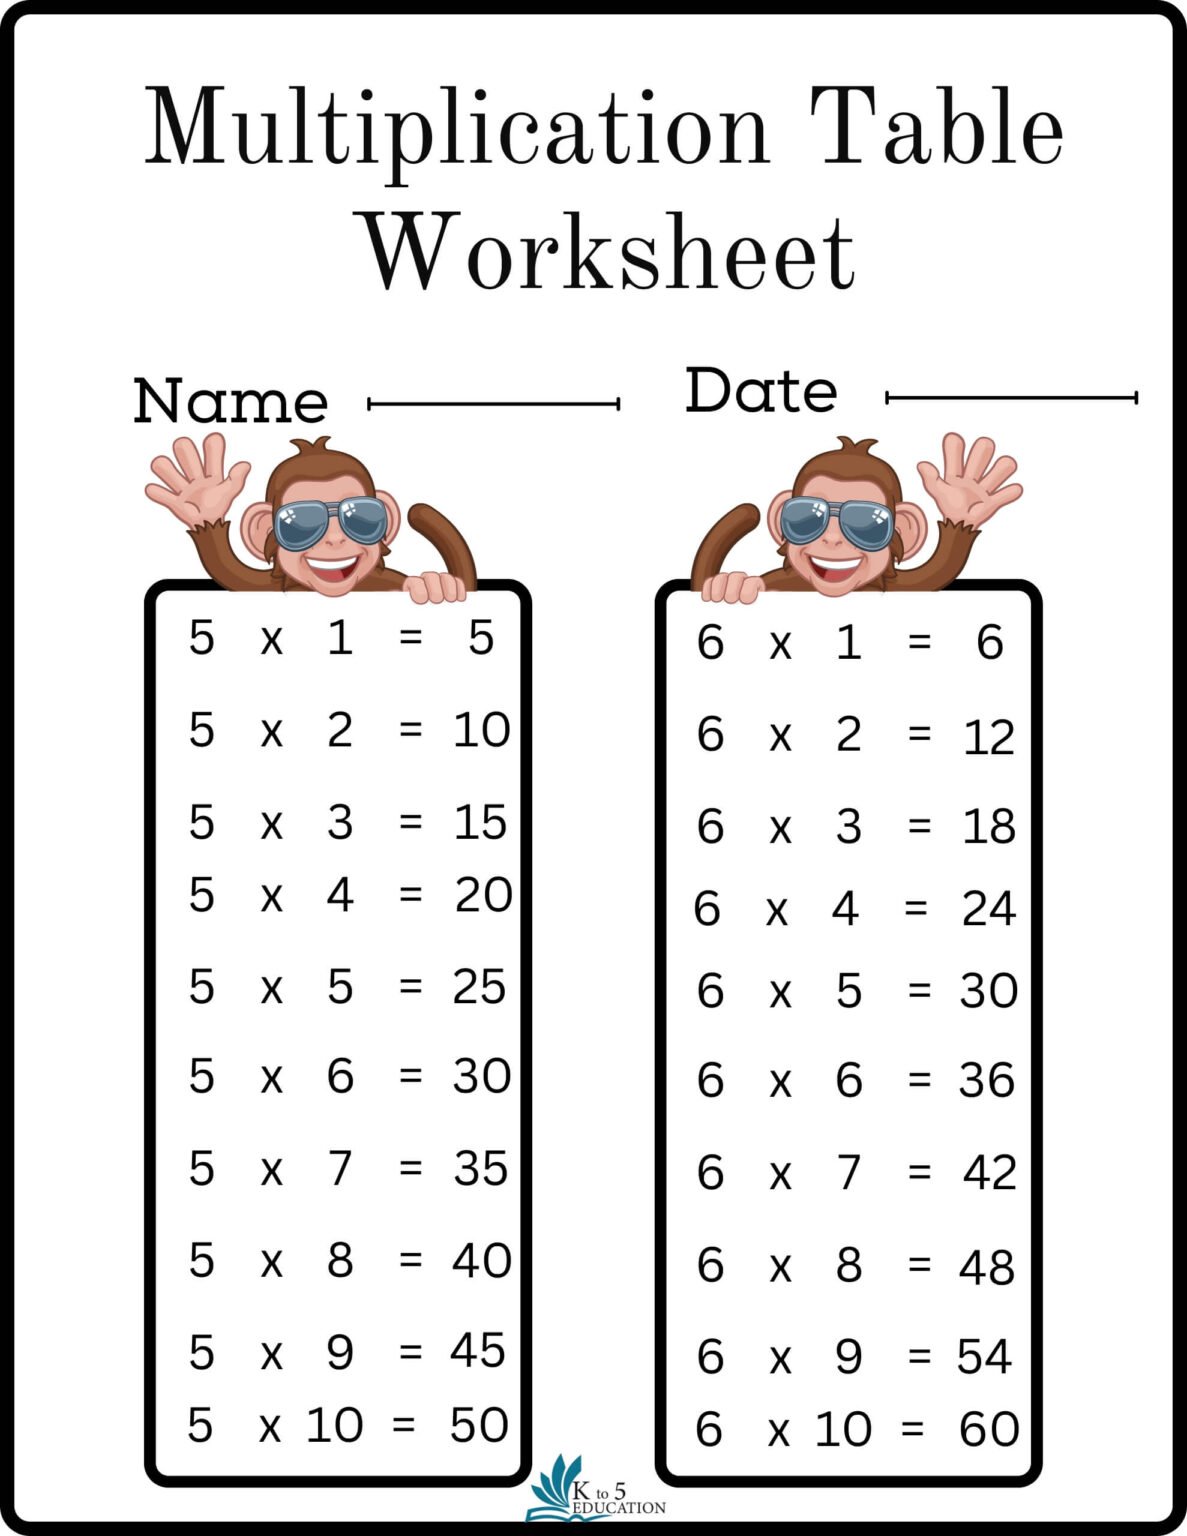 multiplication-table-worksheets-grade-3-free-download